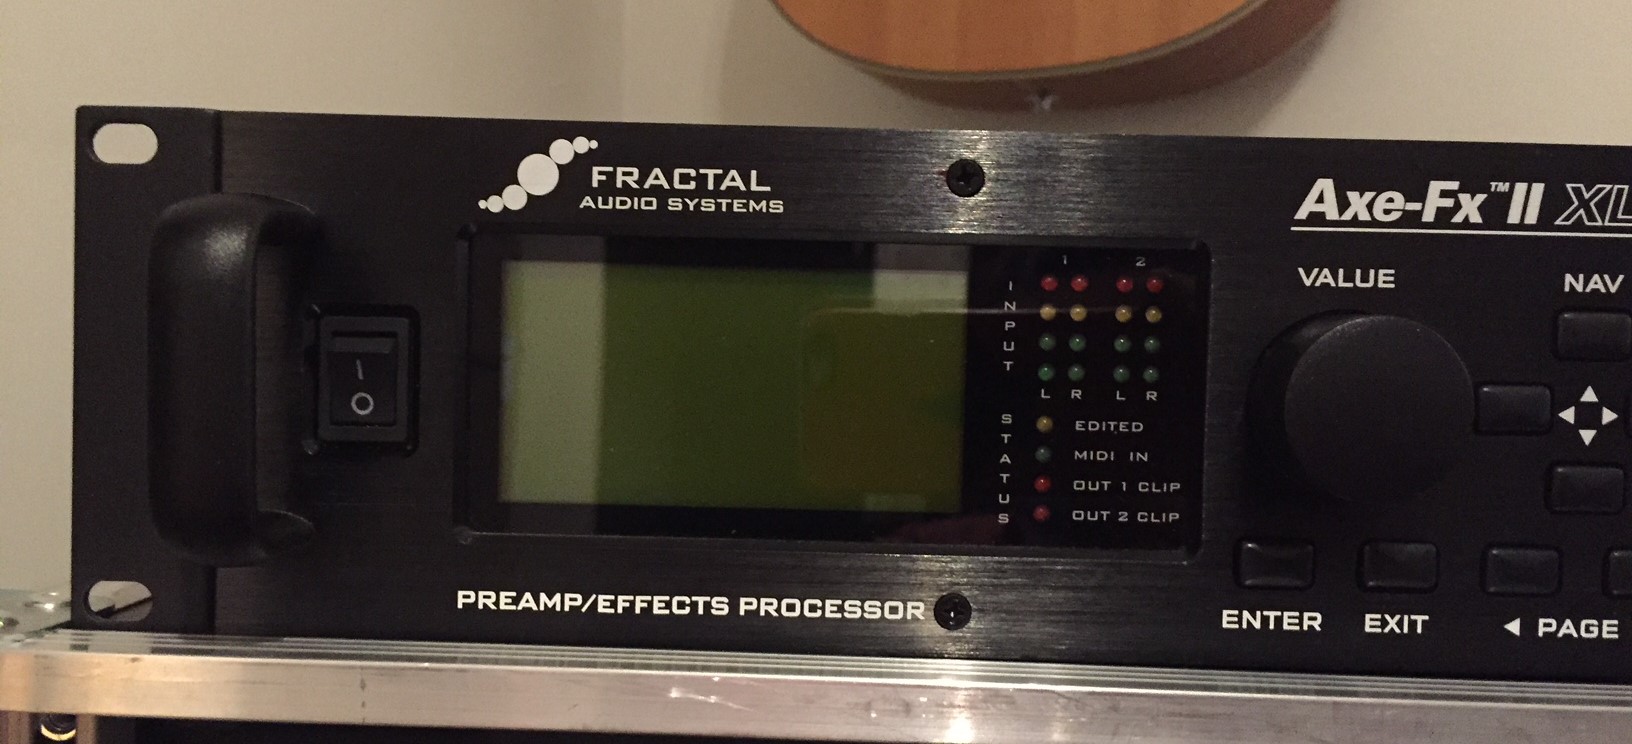 Fractal Audio Systems Axe-Fx II XL image (#2086504) - Audiofanzine